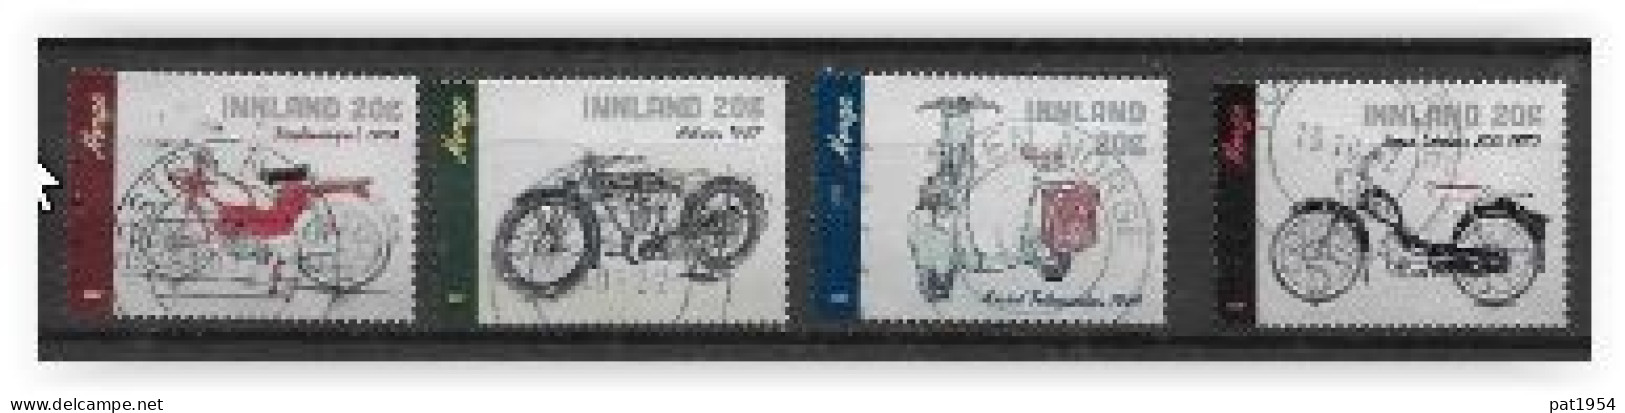 Norvège 2021 N° 1997/2000 Oblitérés Motos - Used Stamps